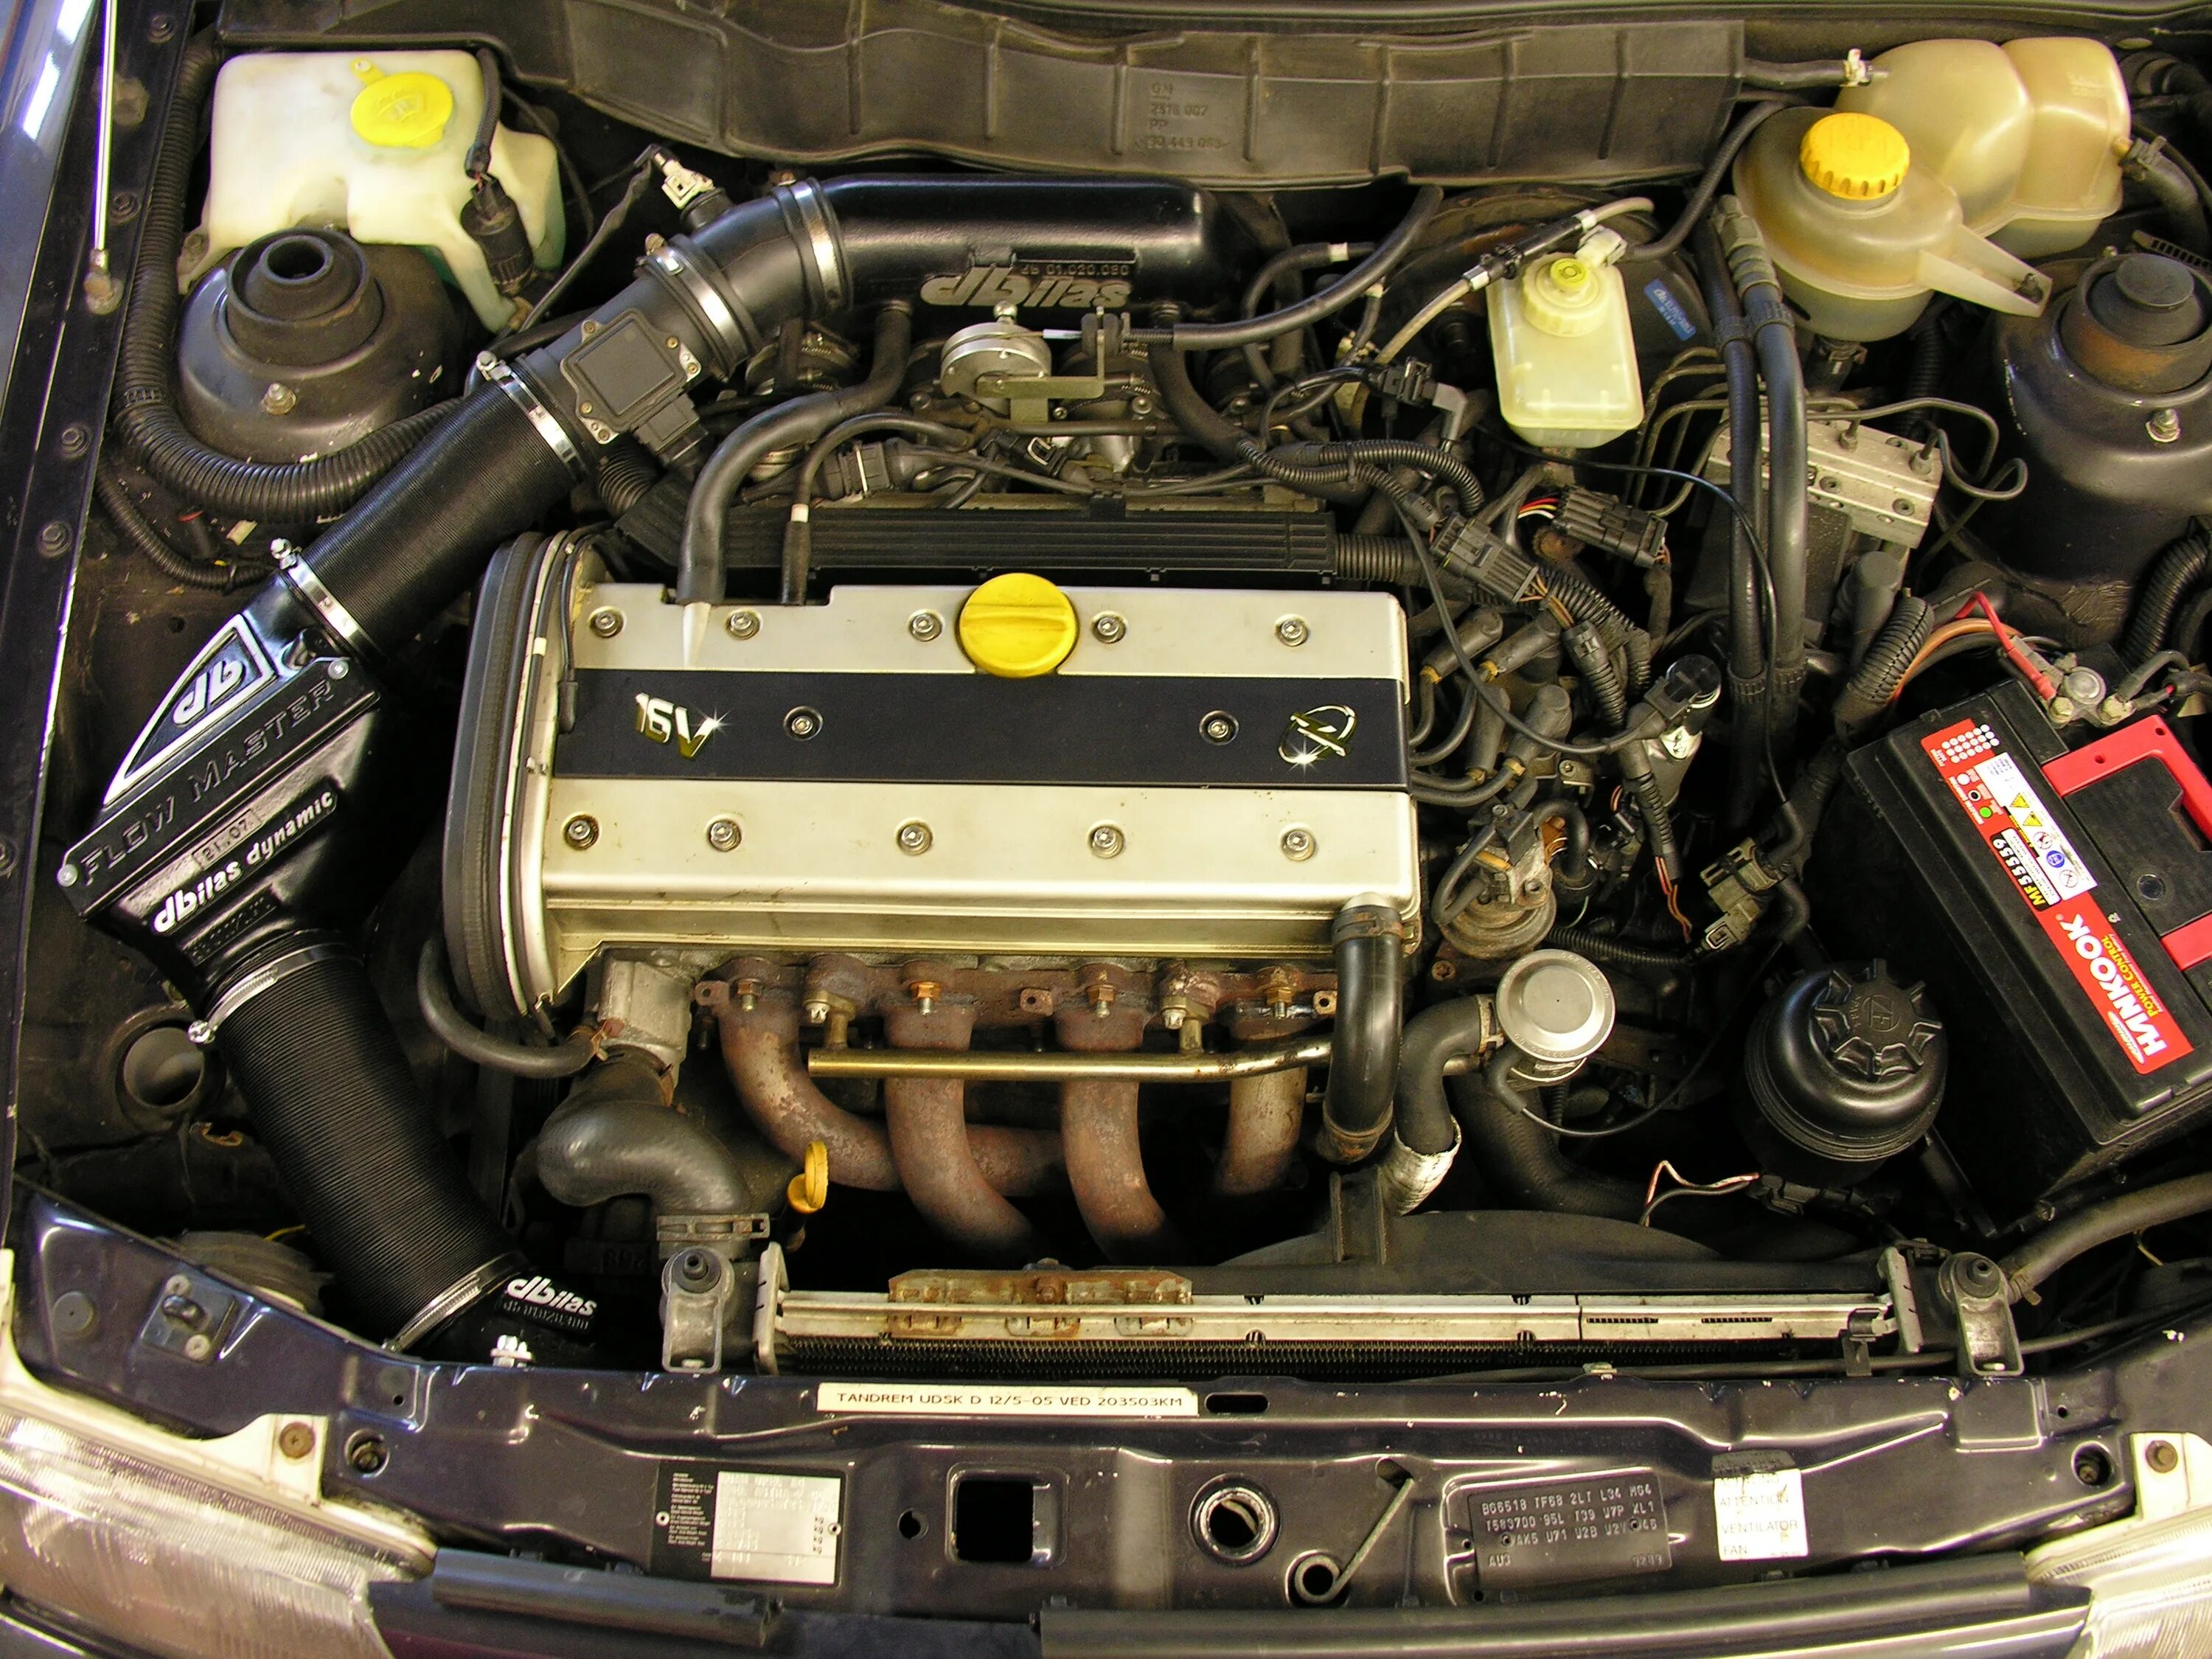 Z 12 3 1 8. Двигатель Опель Вектра б 2.0. Опель Вектра x20xev. Двигатель Opel x18xe 1.8. Двигатель Опель Вектра б 1.6.